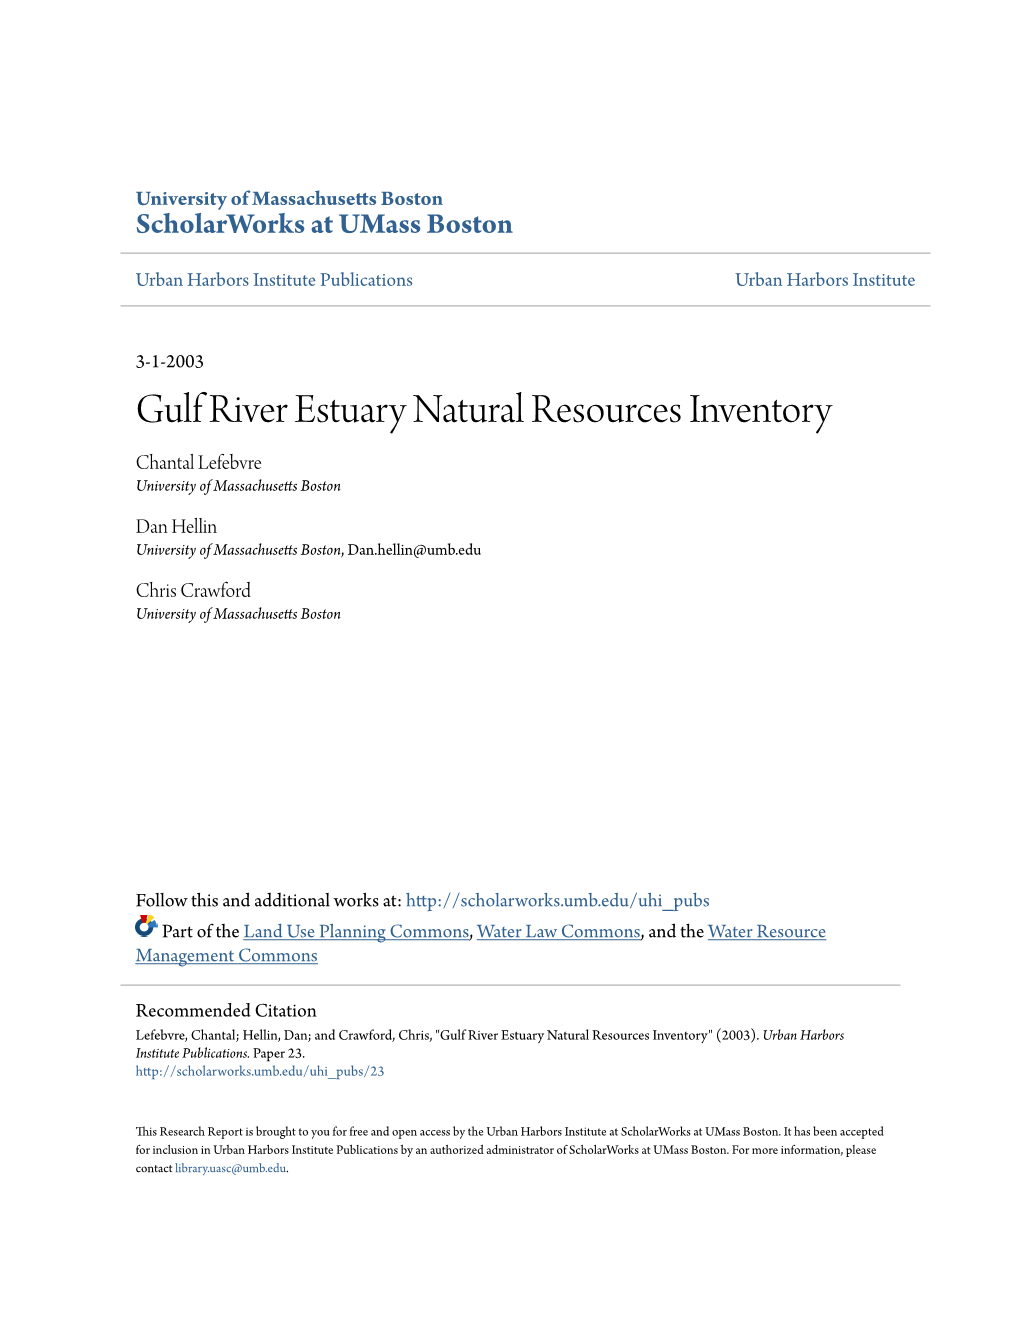 Gulf River Estuary Natural Resources Inventory Chantal Lefebvre University of Massachusetts Boston